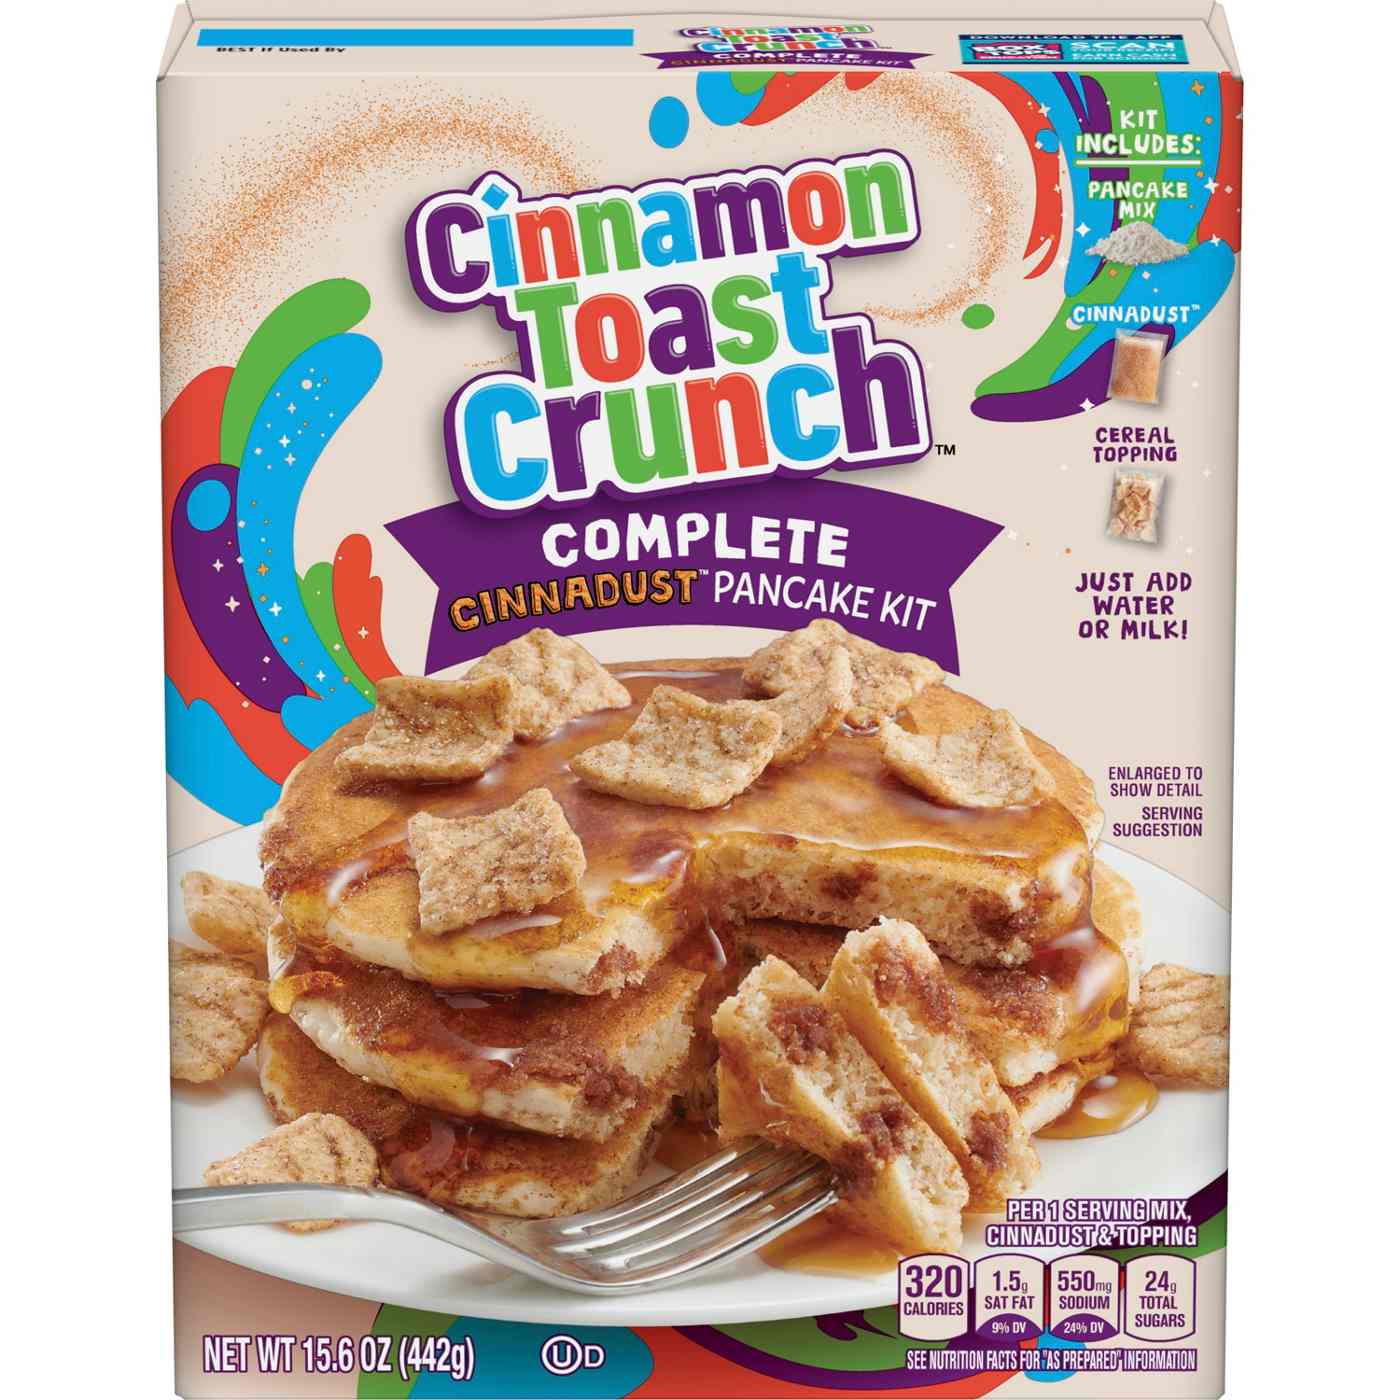 Betty Crocker Cinnamon Toast Crunch Cinnadust Pancake Kit; image 1 of 4